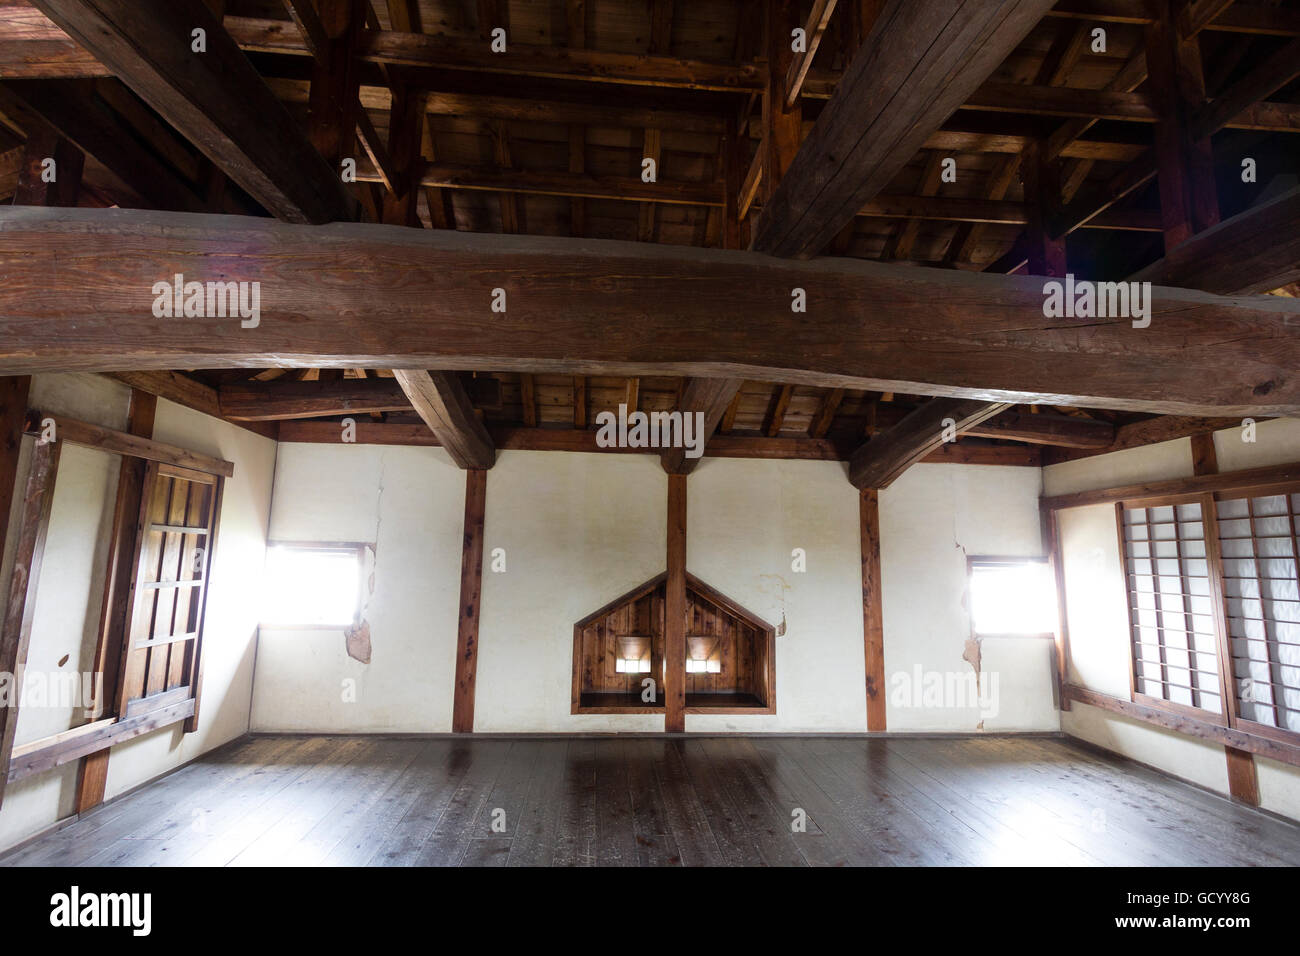 Japan, Matsuyama, Iyo Matsuyama castle. Yagura, turret, interior showing double shooting, gun ports and huge wooden beams supporting the ceiling. Stock Photo